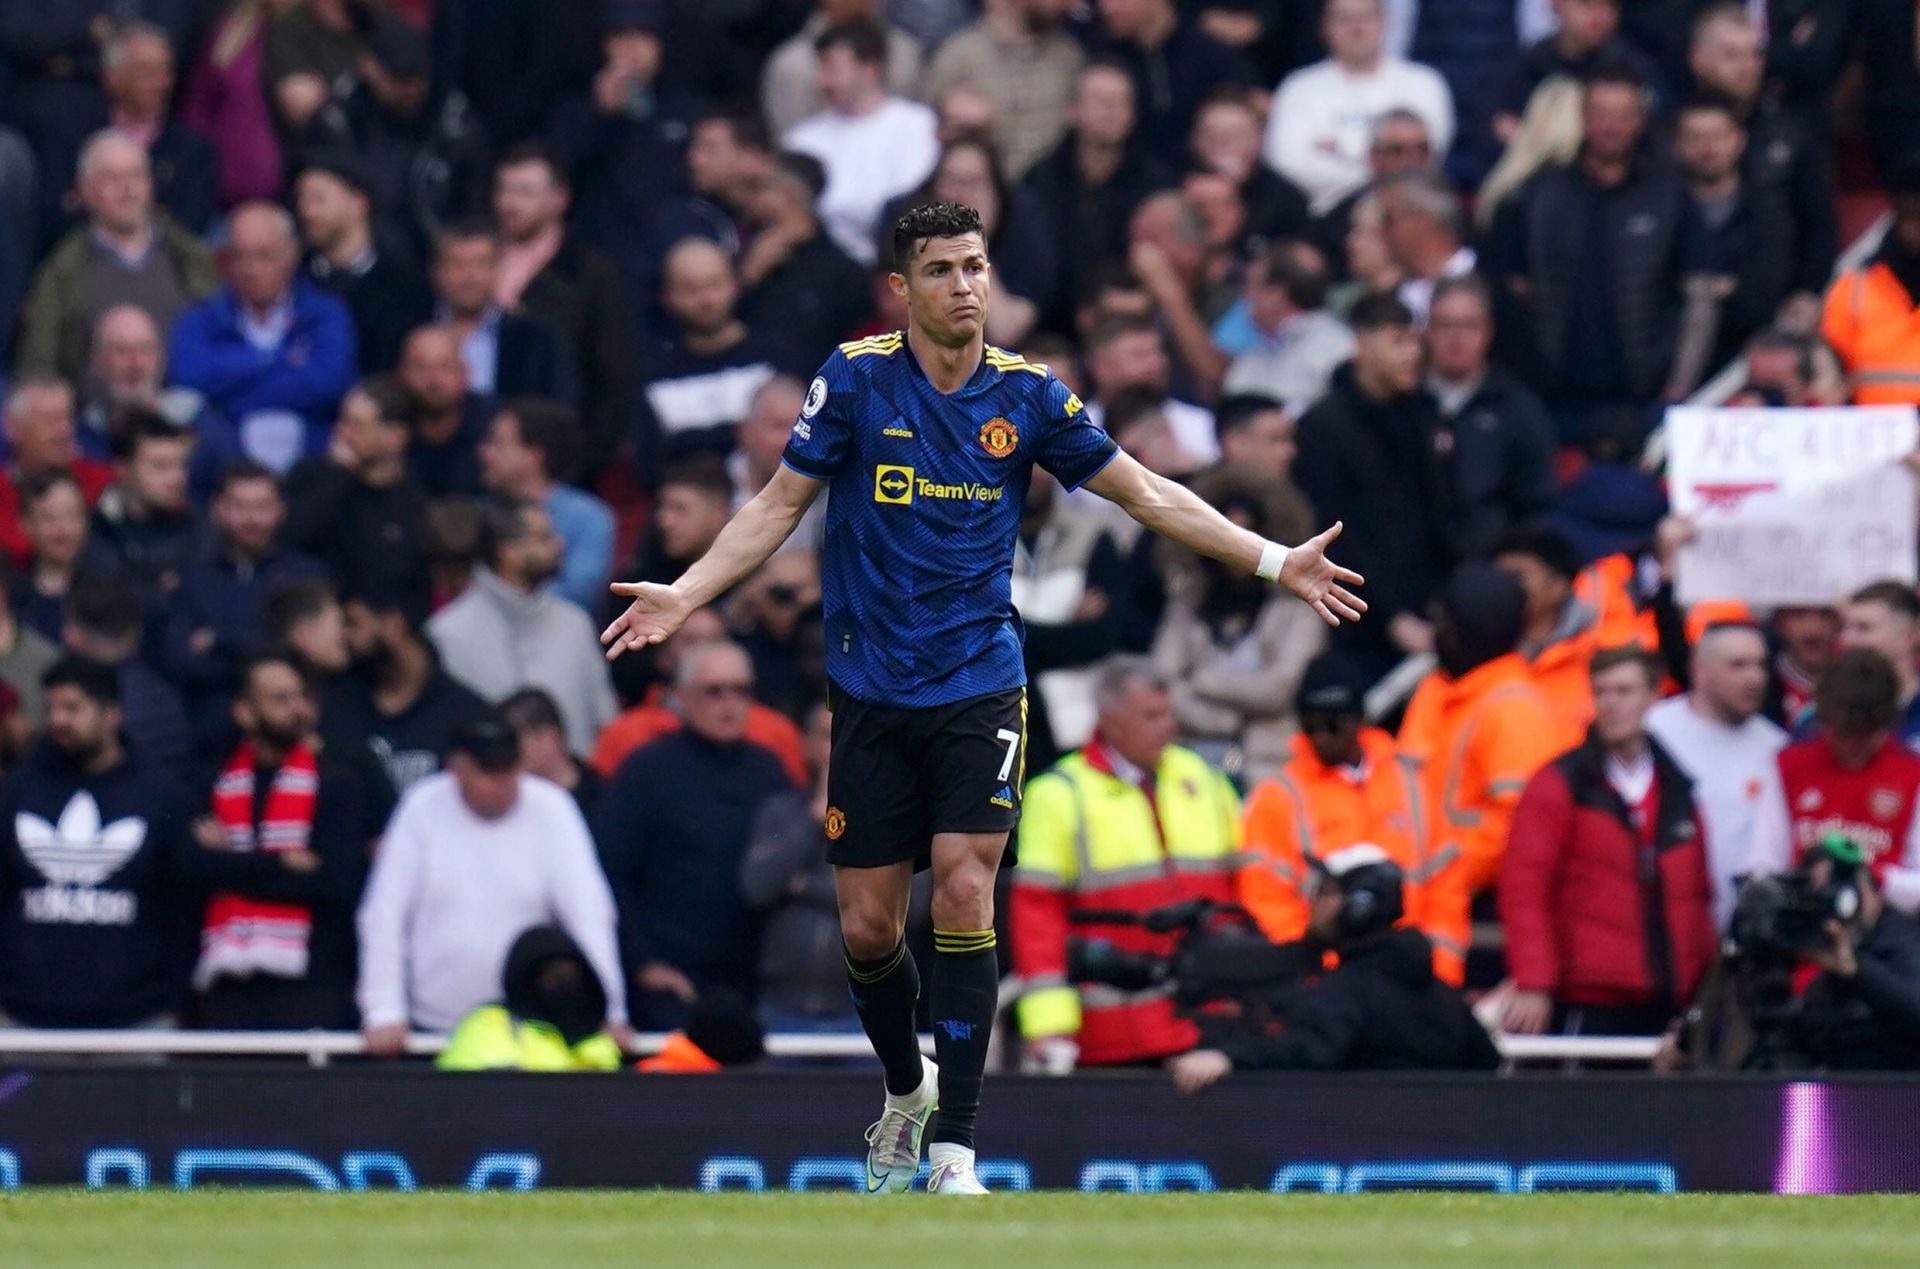 Ronaldo scored a consolation goal for Manchester United